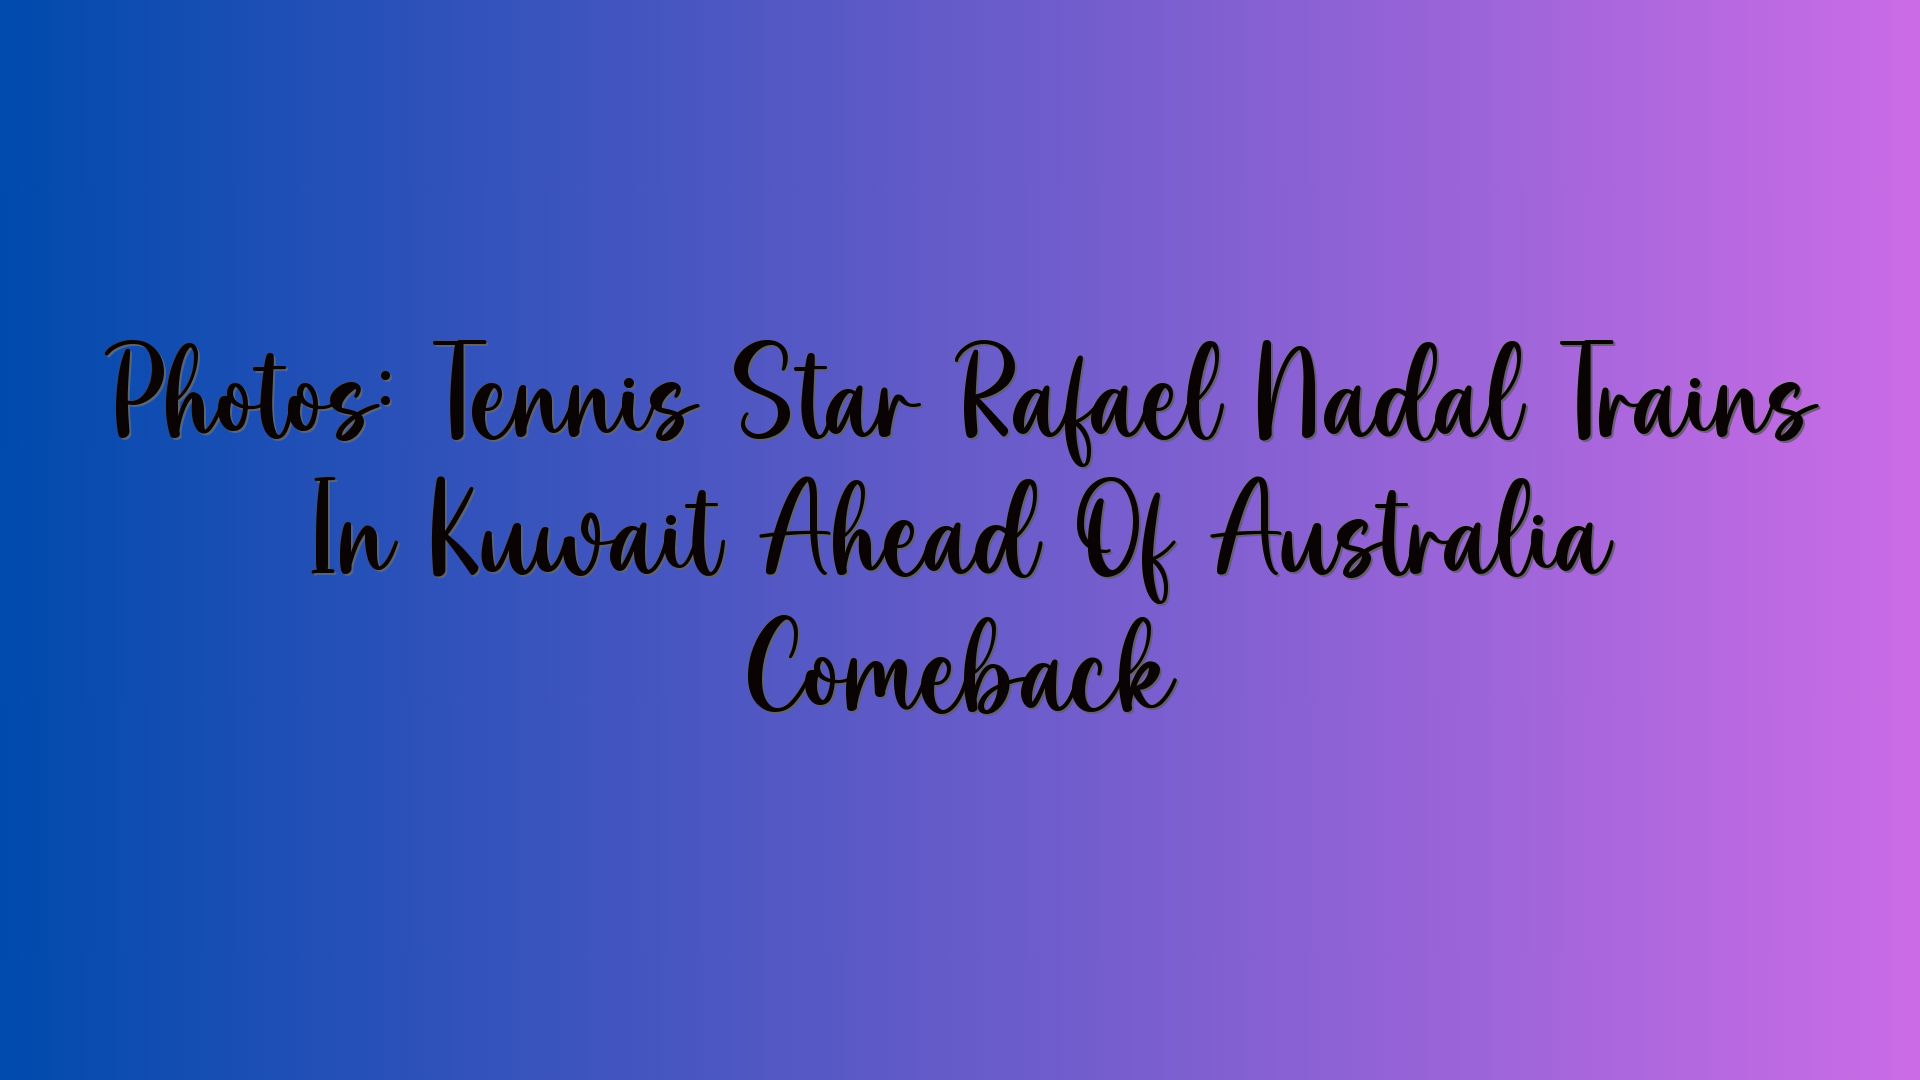 Photos: Tennis Star Rafael Nadal Trains In Kuwait Ahead Of Australia Comeback